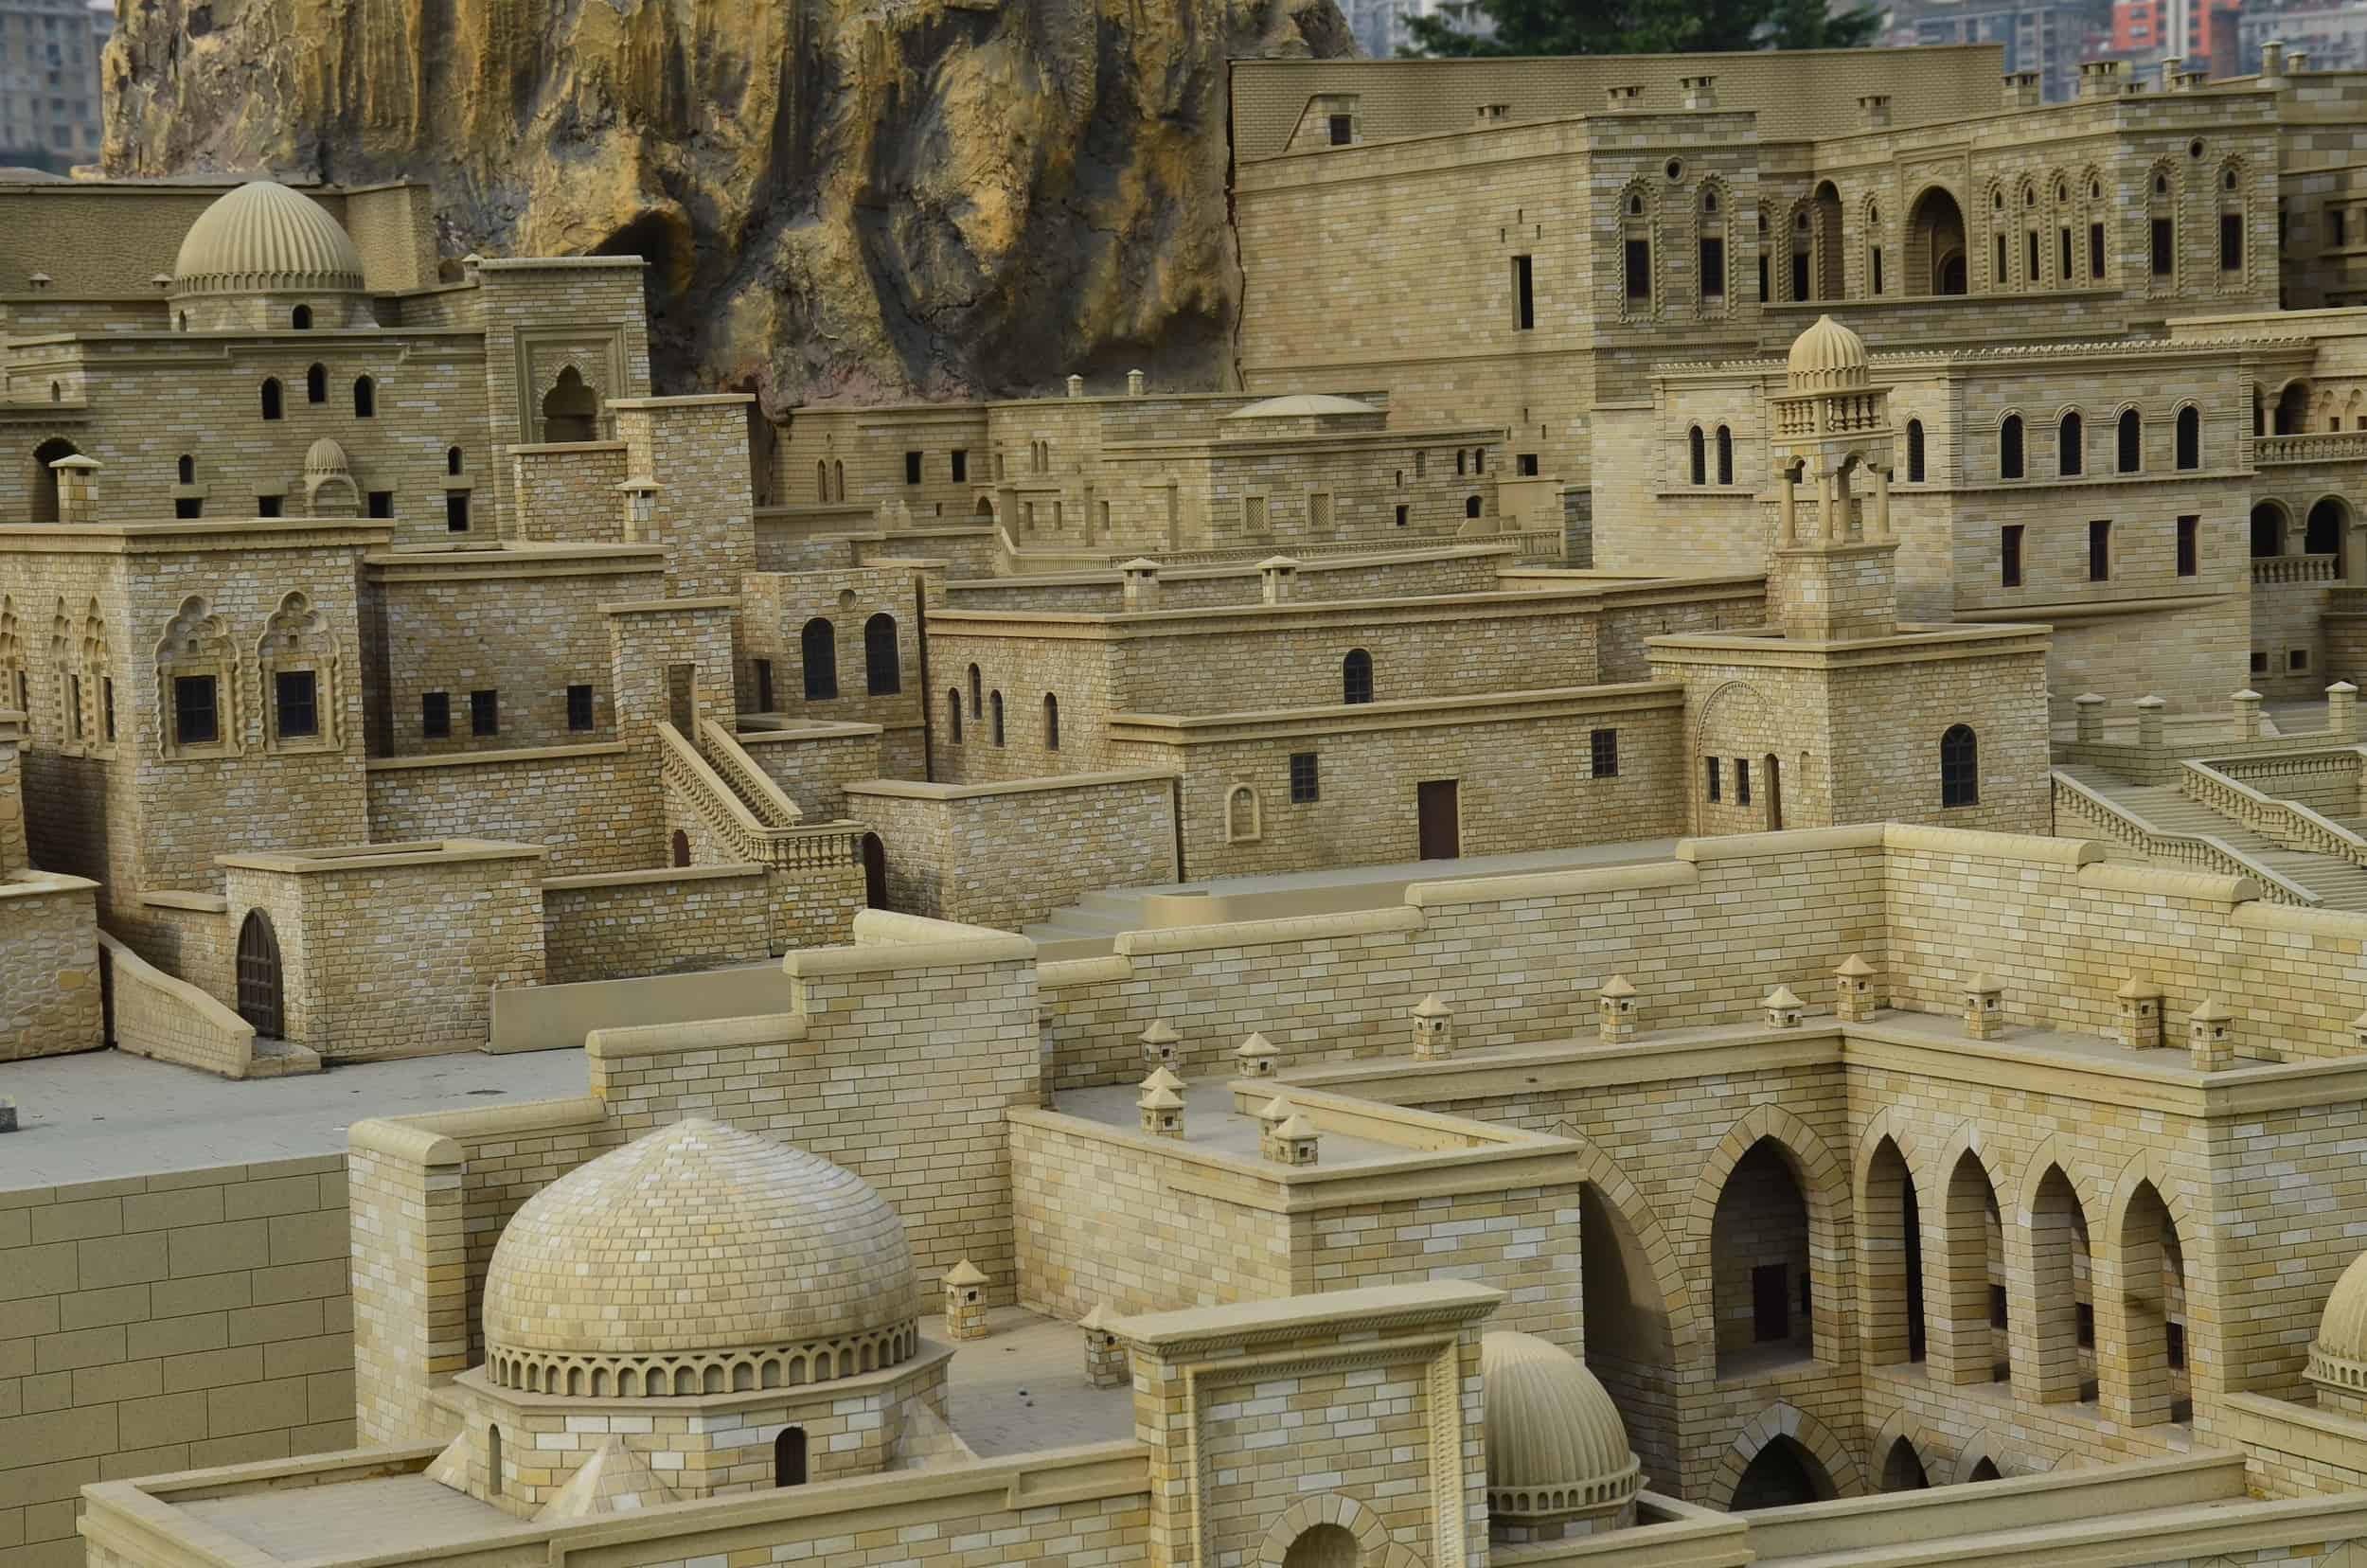 Model of the stone houses of Mardin